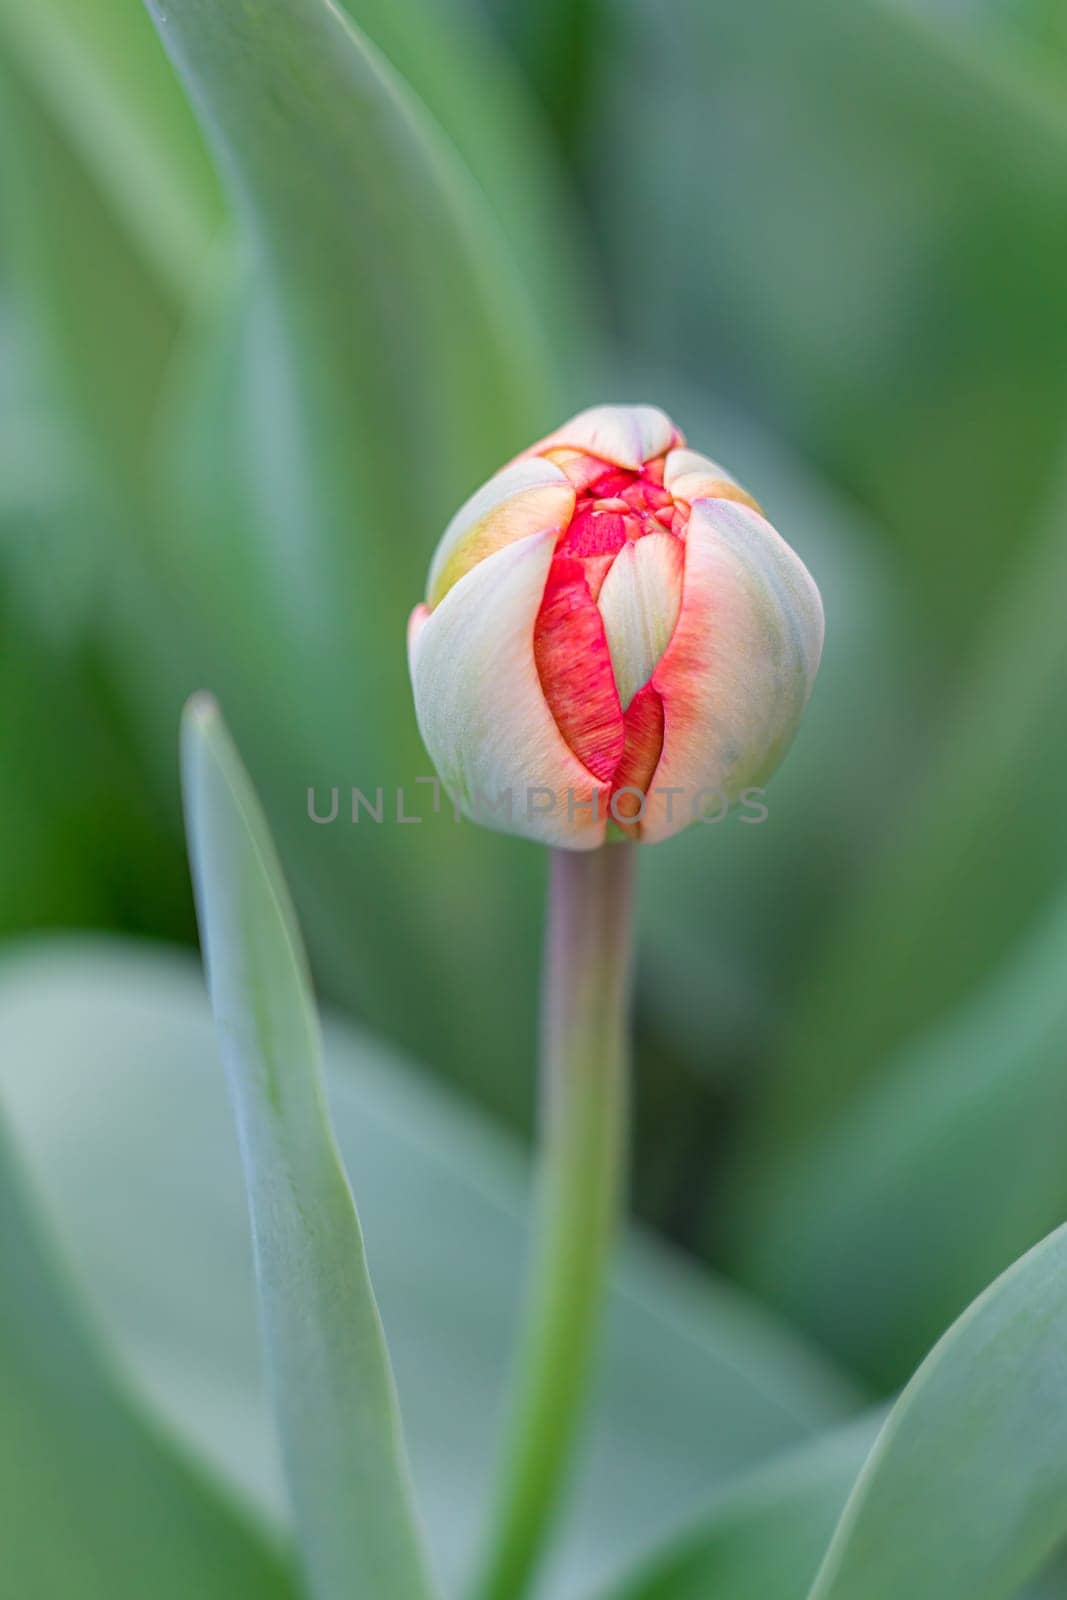 red tulip bud close-up on a beautiful background. photo beautiful